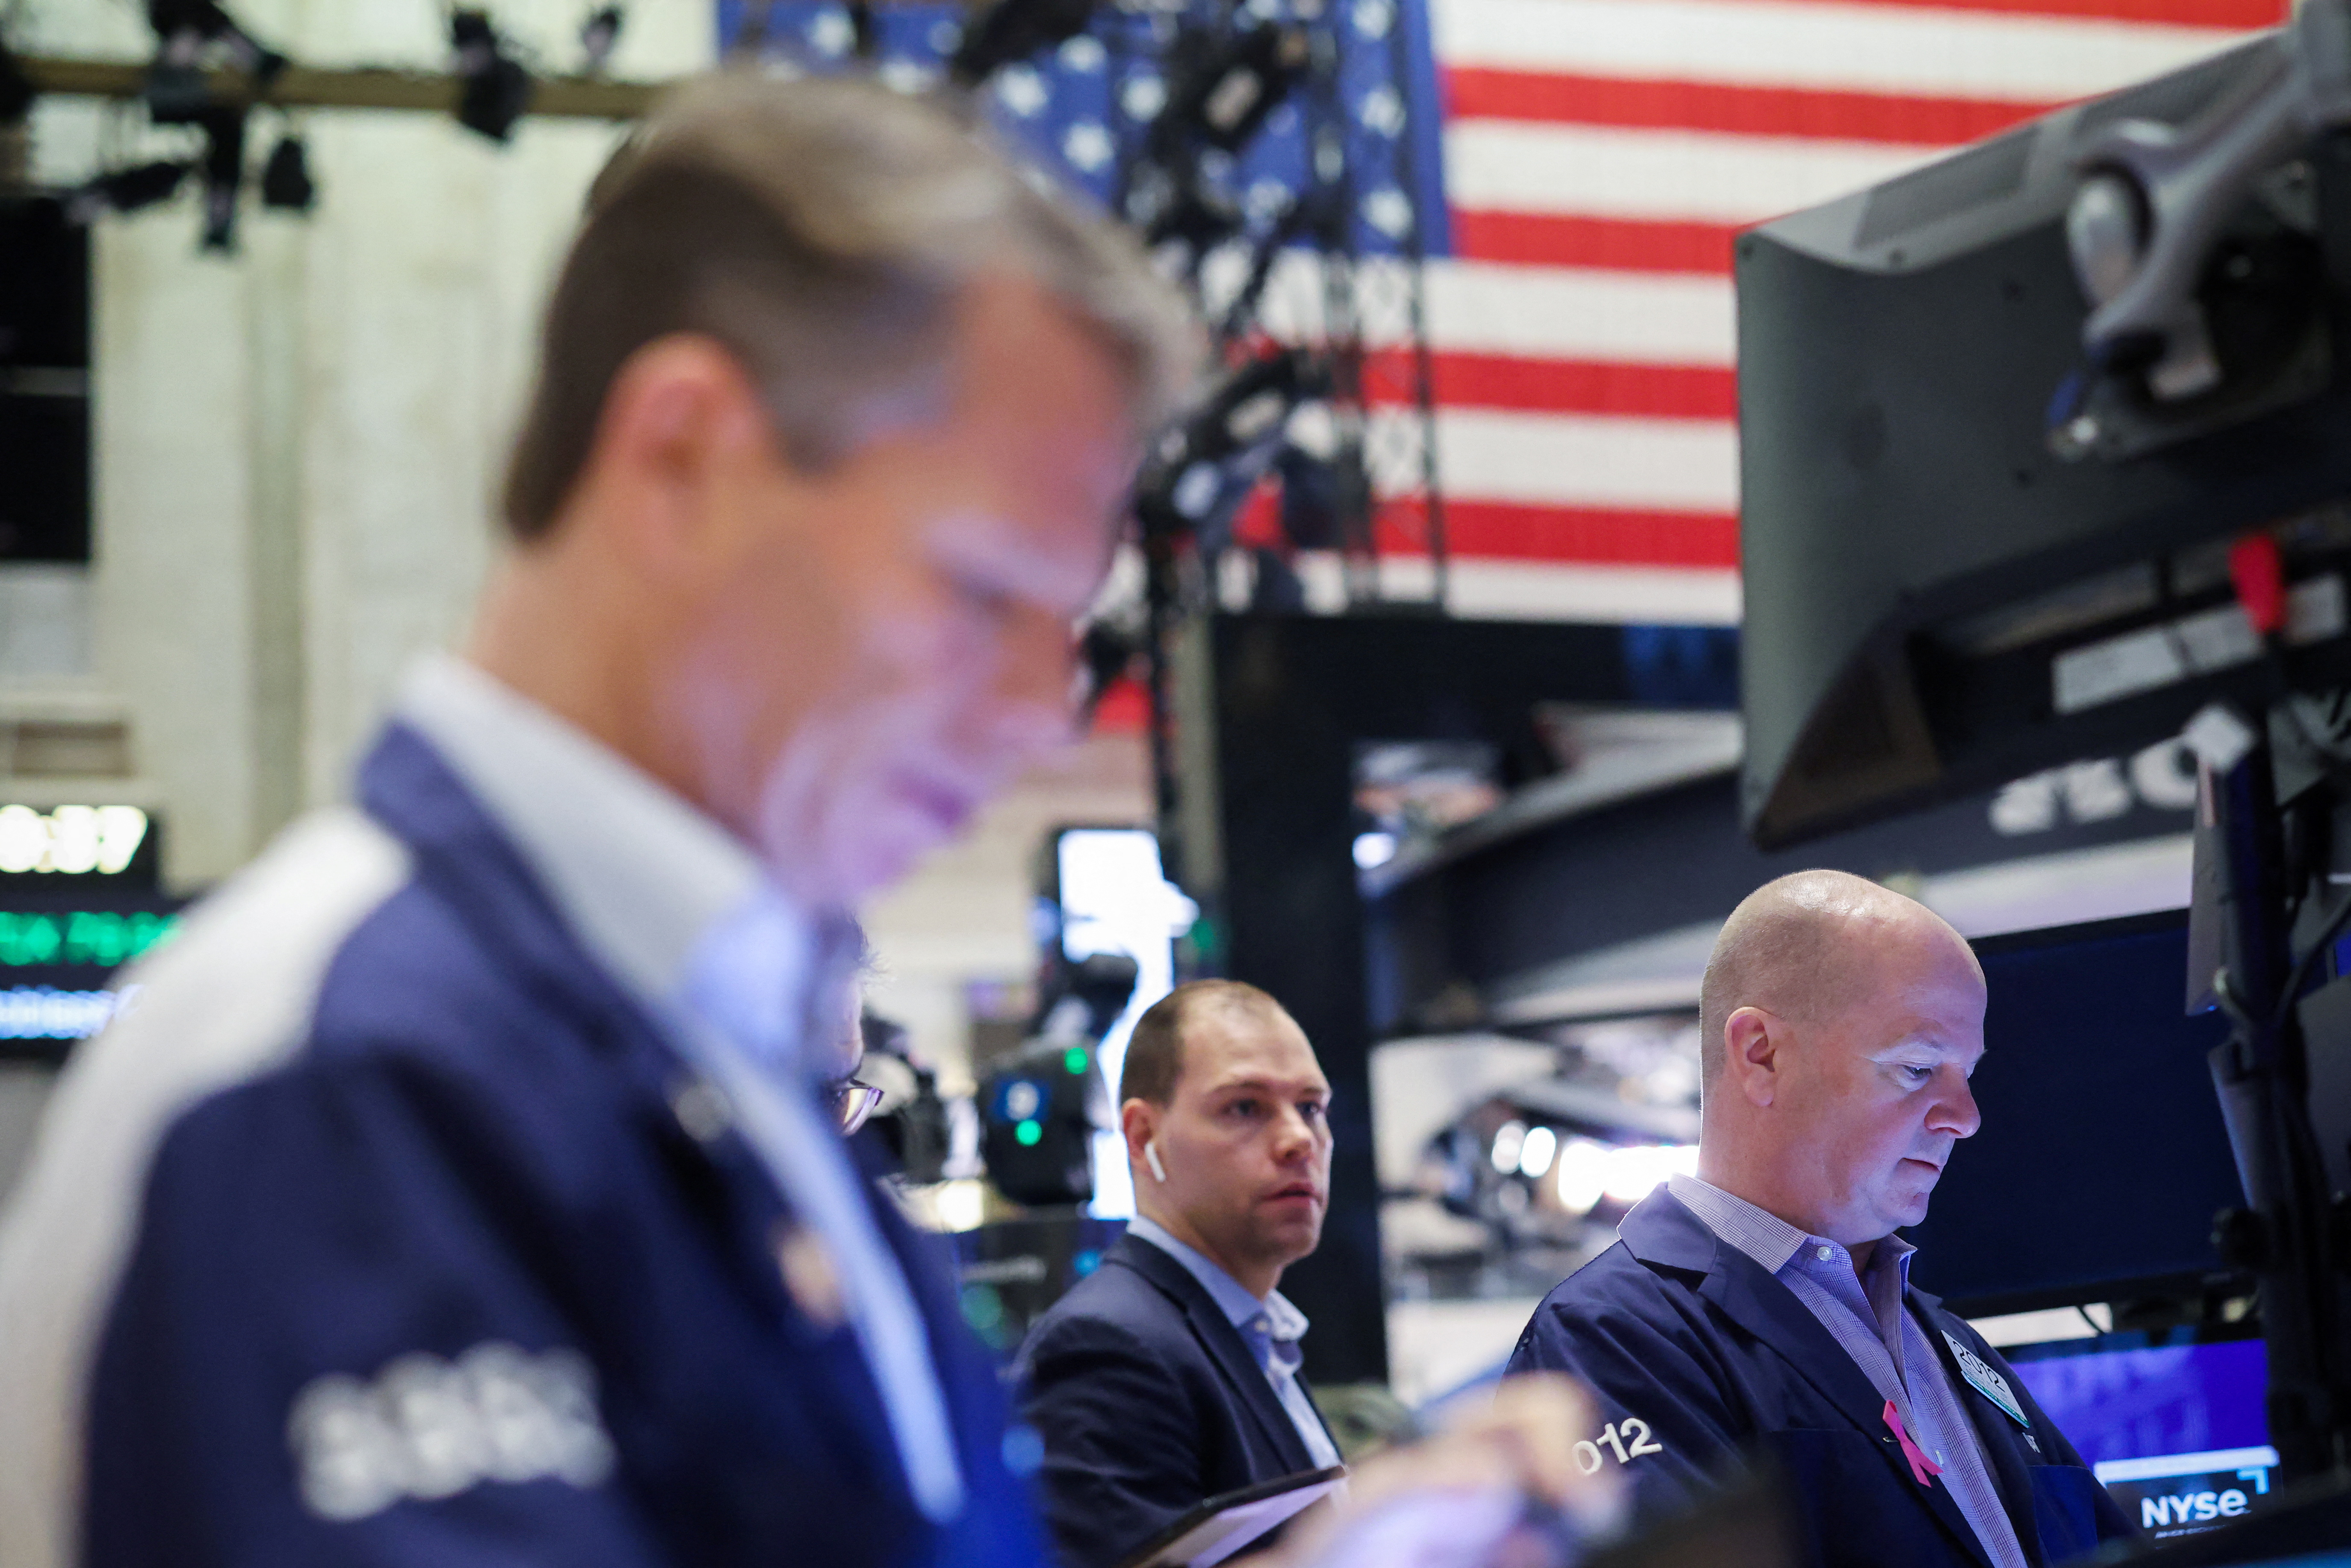 Stock market news live updates: Stocks rally after December jobs report